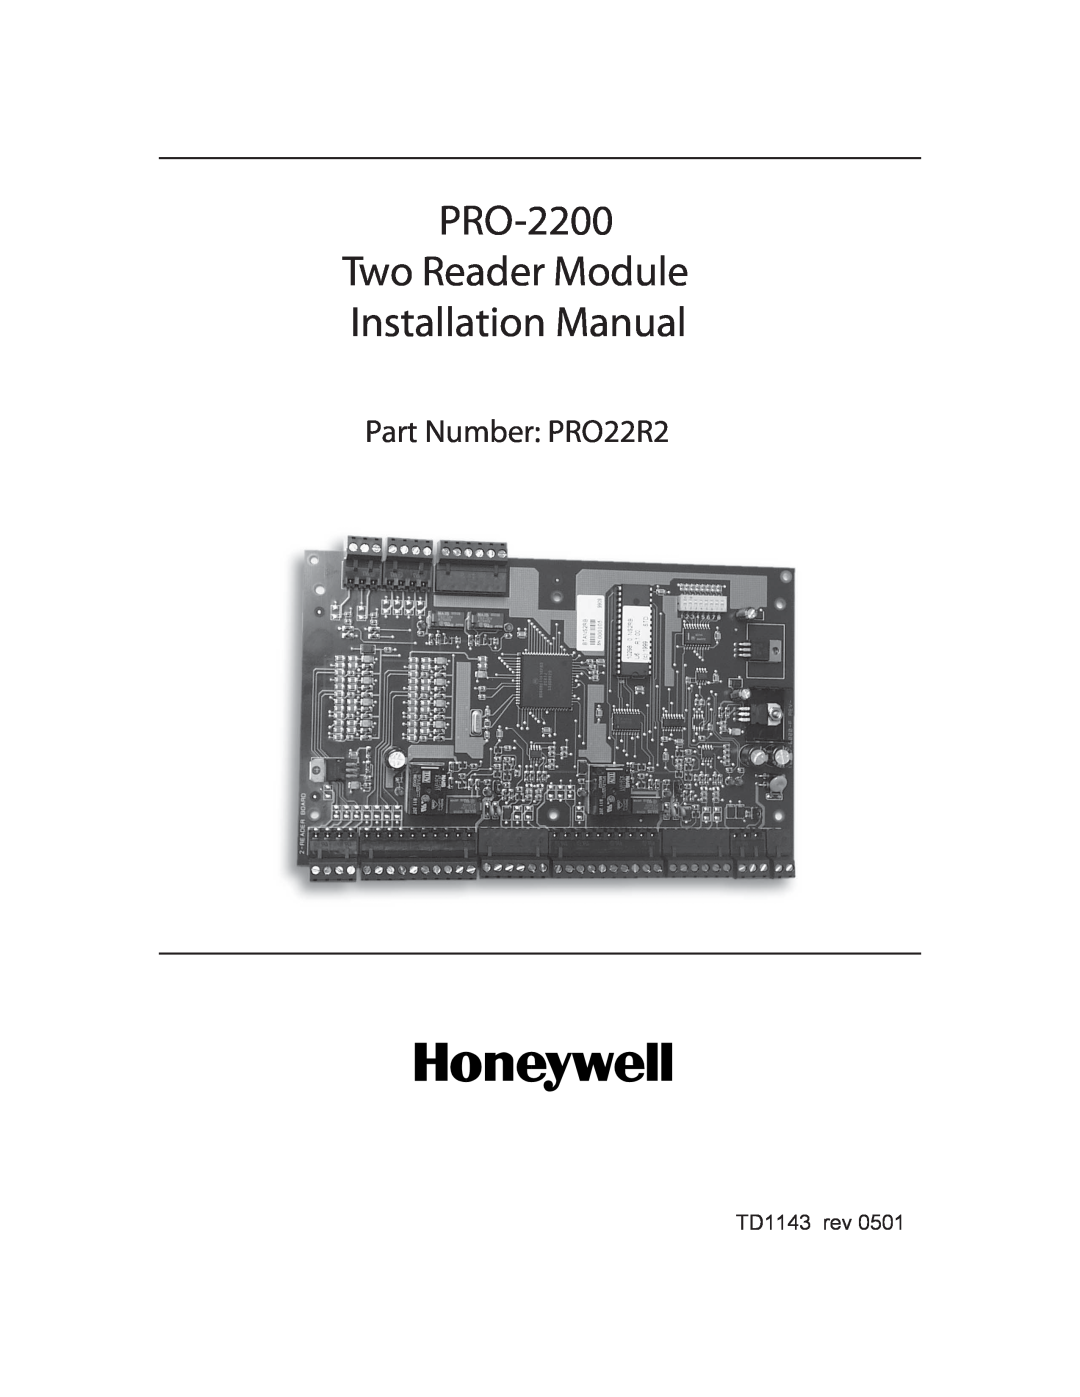 Honeywell manual Part Number PRO22EN, PRO-2200 Ethernet Board Installation Manual, TD1145 rev0601 